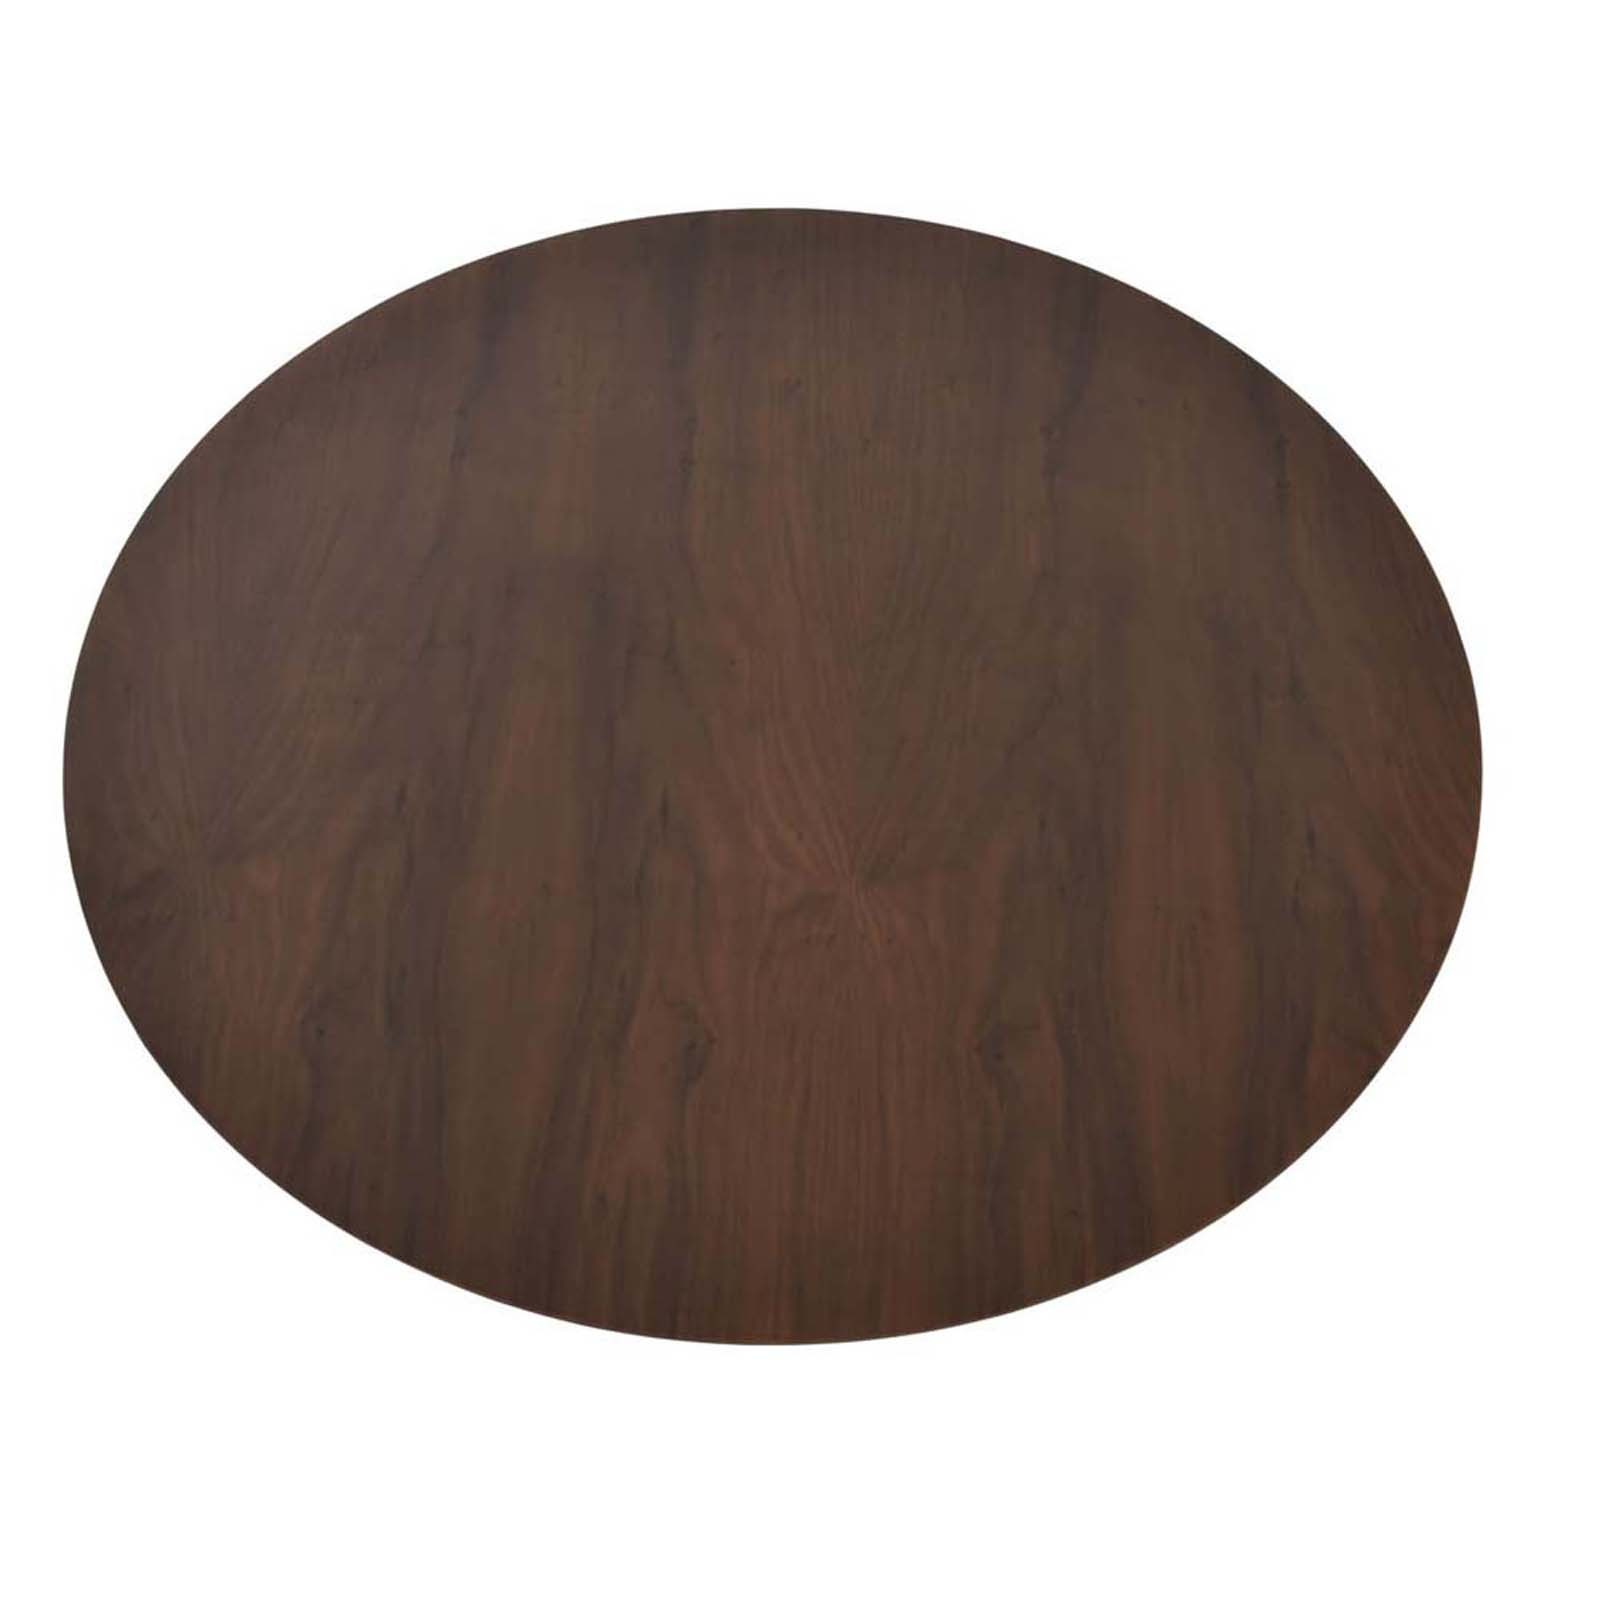 40" Walnut Veneer Finish Wood Round Table Top